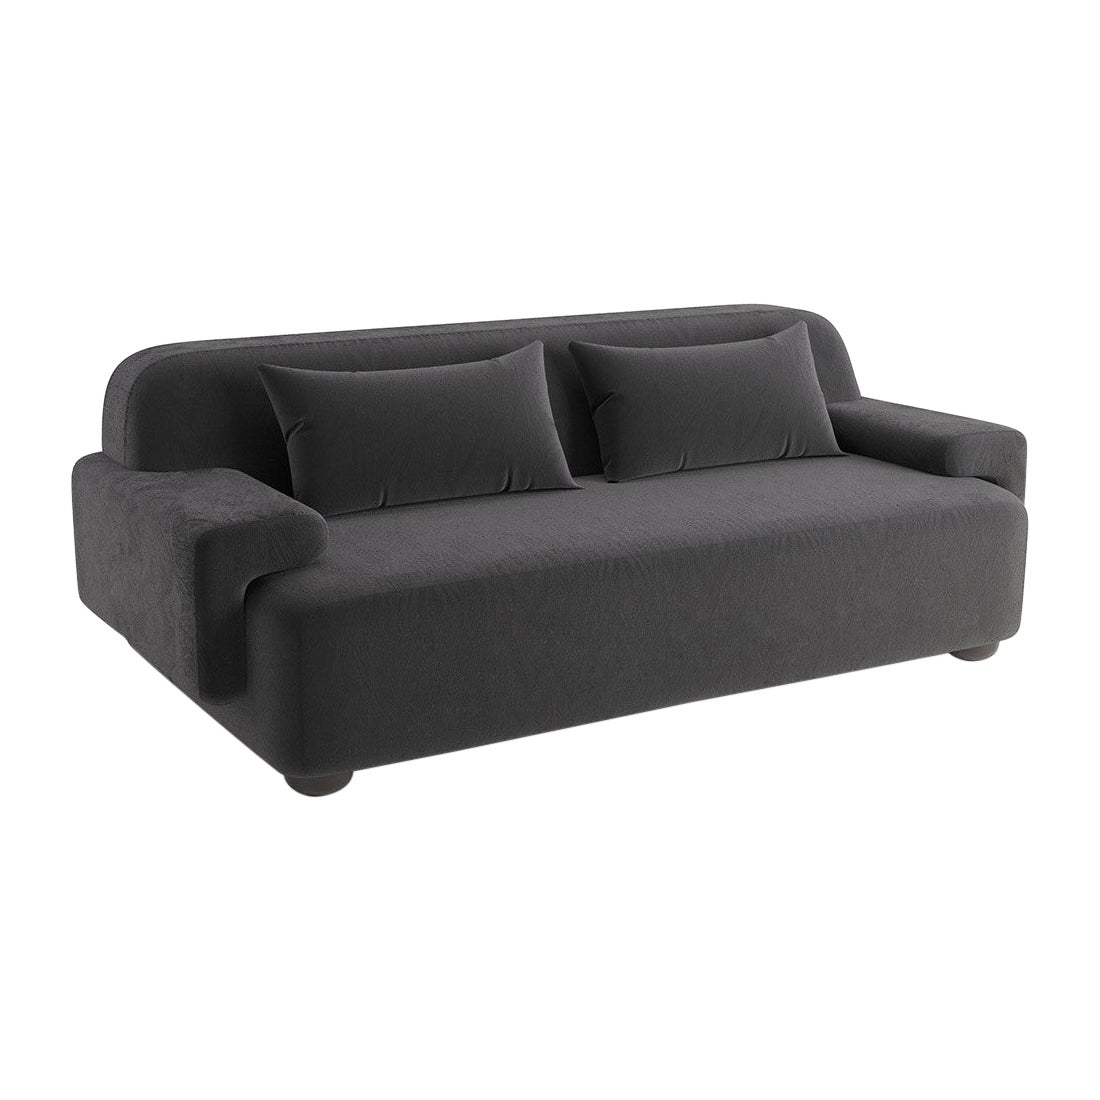 Popus Editions Lena 3 Seater Sofa in Dark Brown Como Velvet Upholstery For Sale